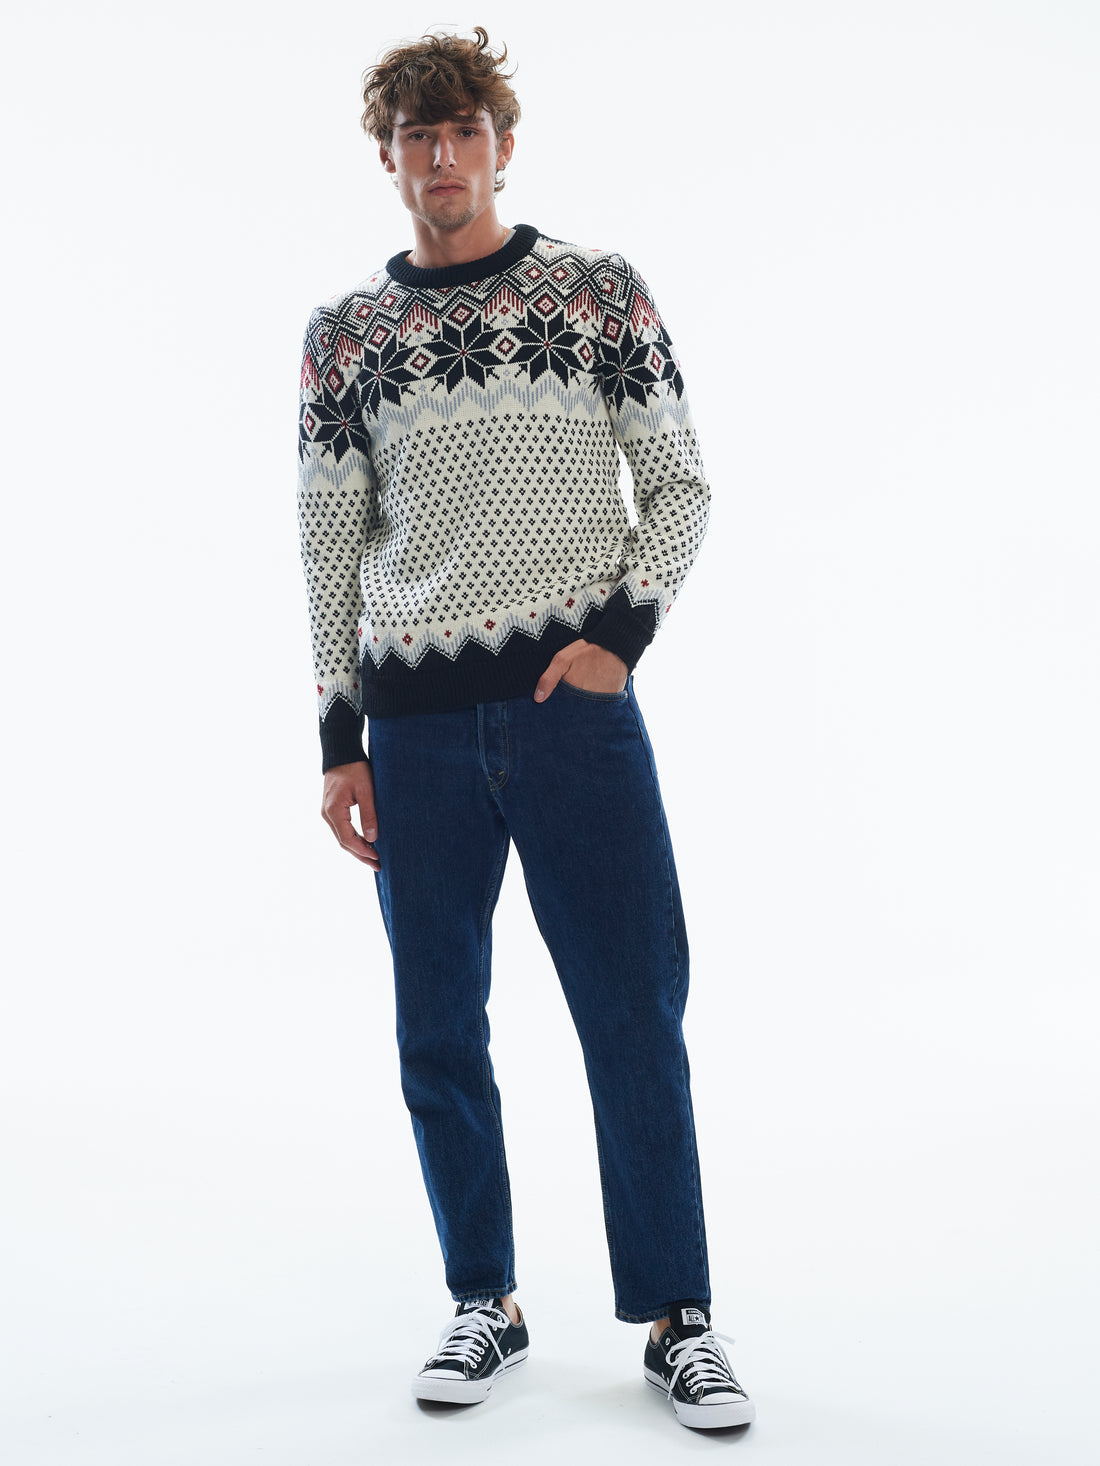 Dale of Norway - Vegard Men's Sweater - Black